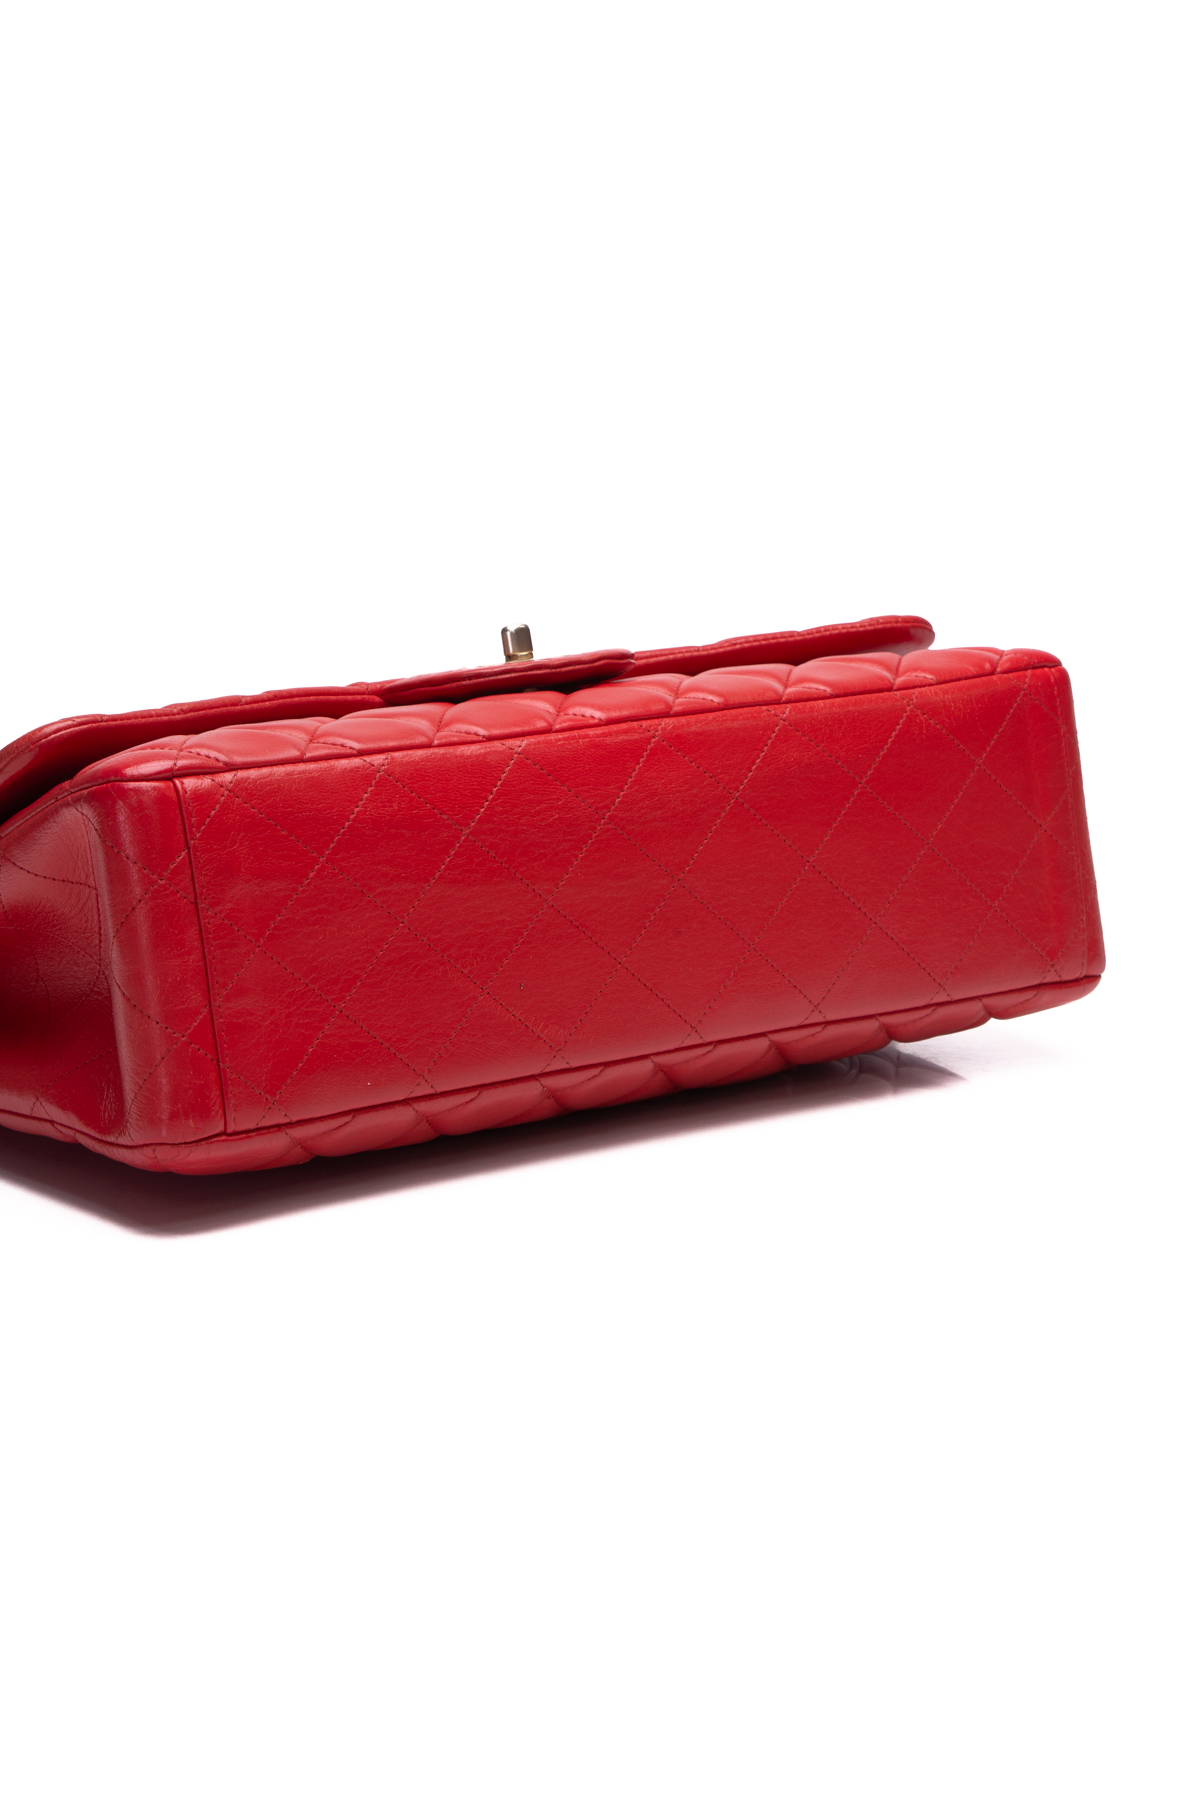 Chanel Straight Flap Single Chain Shoulder Bag Red Satin 98788 | eBay